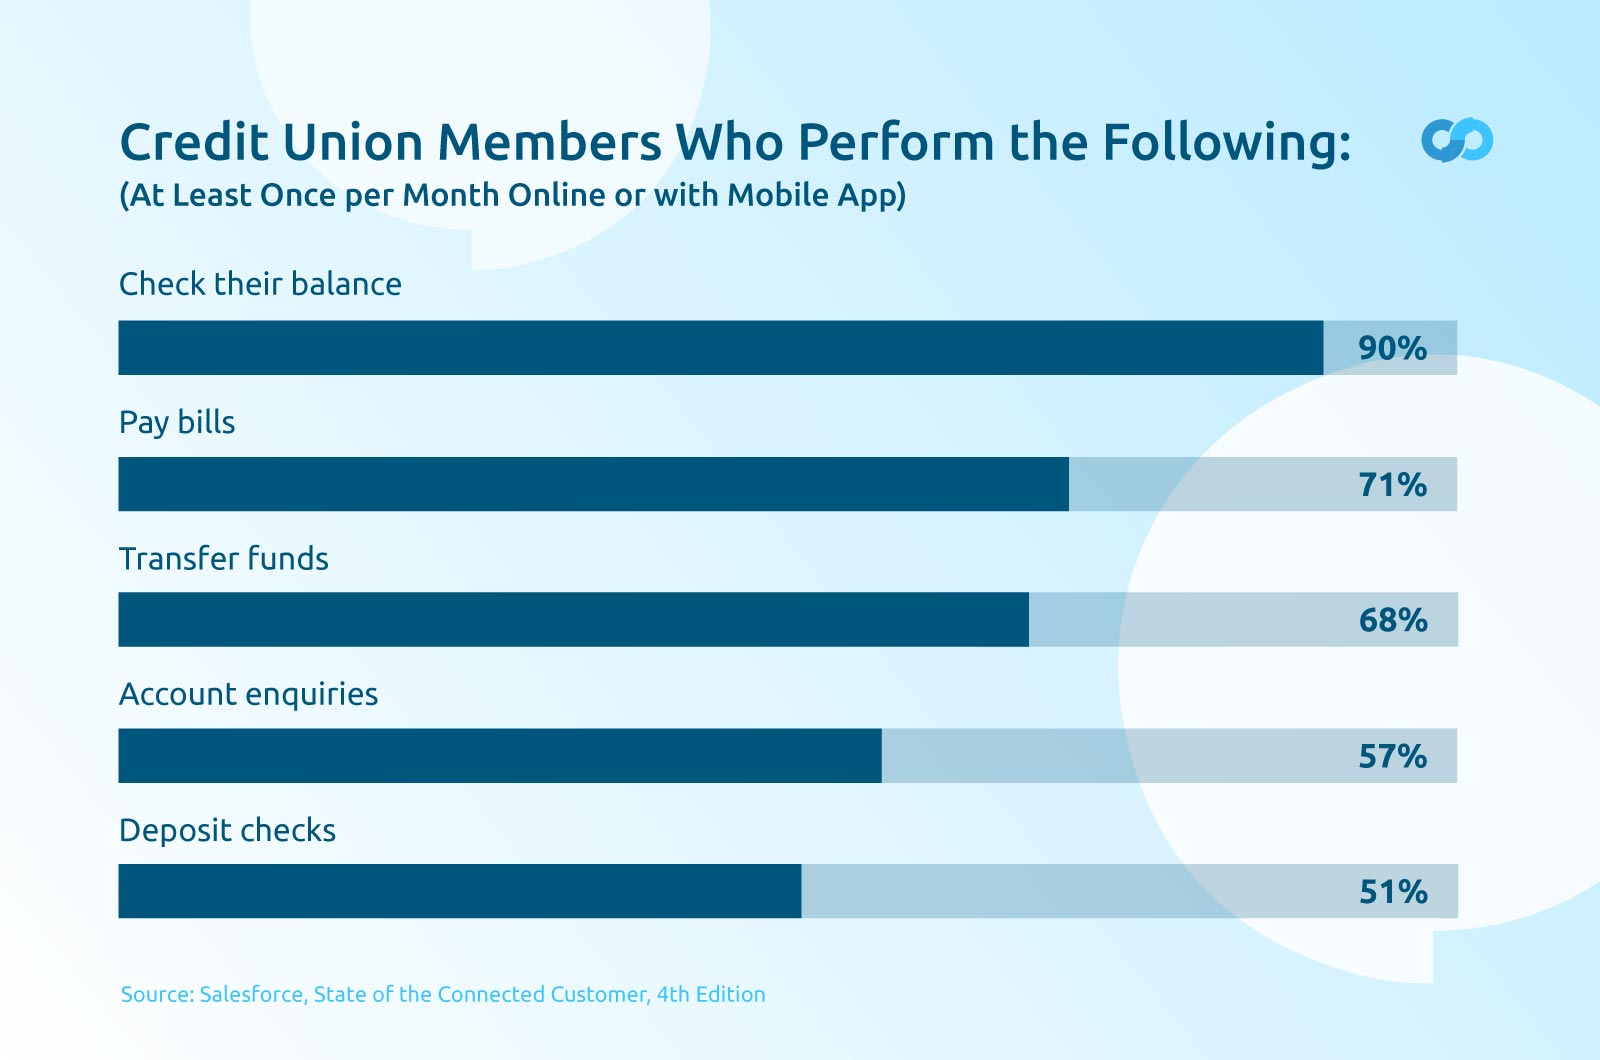 Credit Union Members Performance